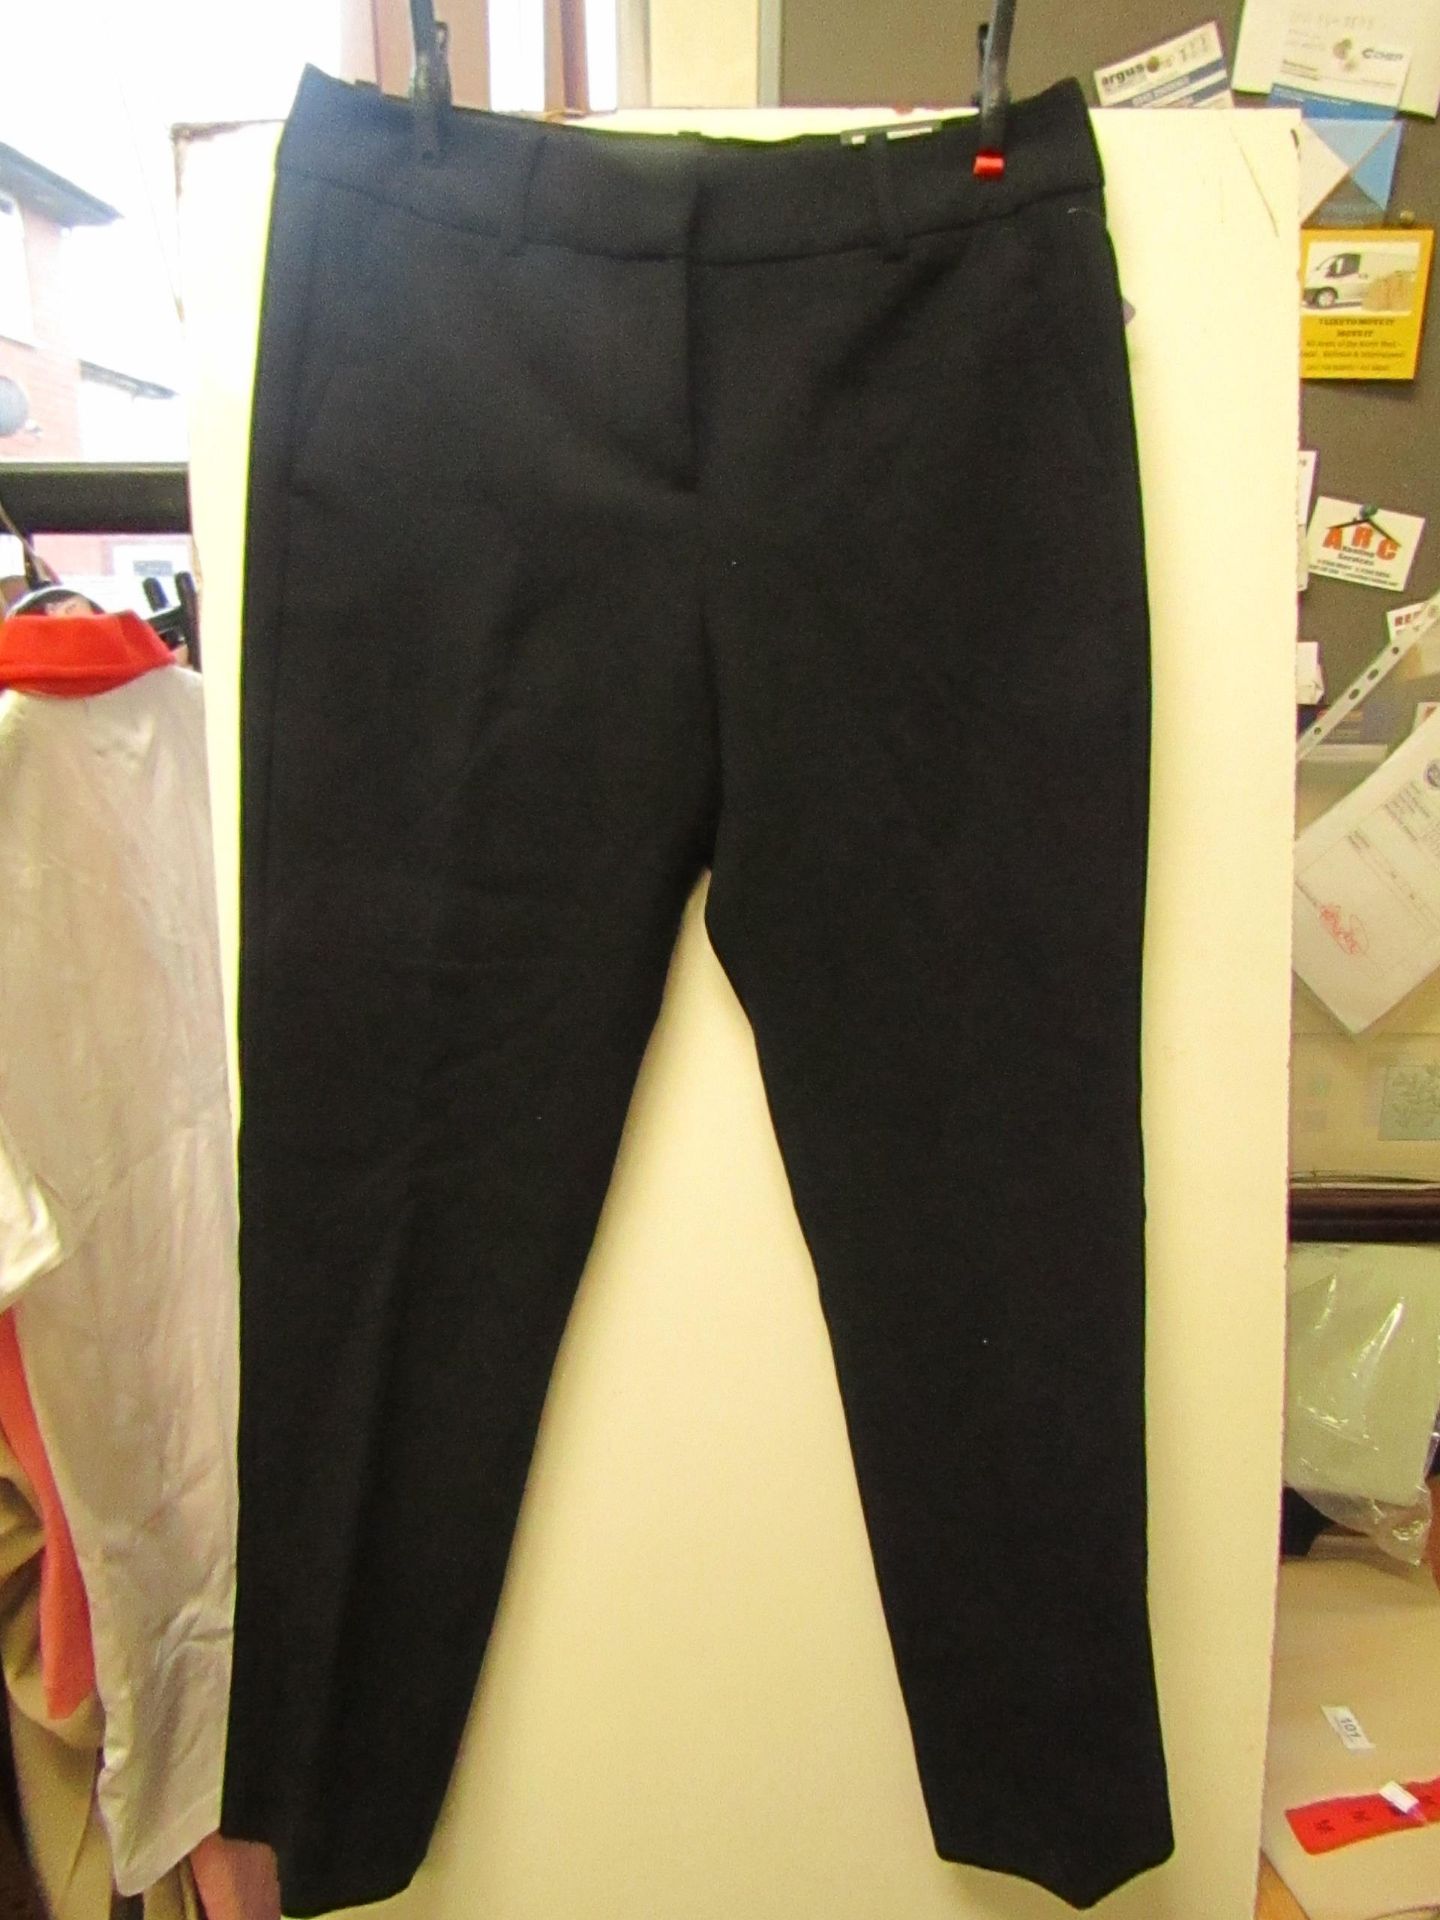 Kirkland Signature Ladies Pants Black Size 8, 27 " Inseam New With Tags